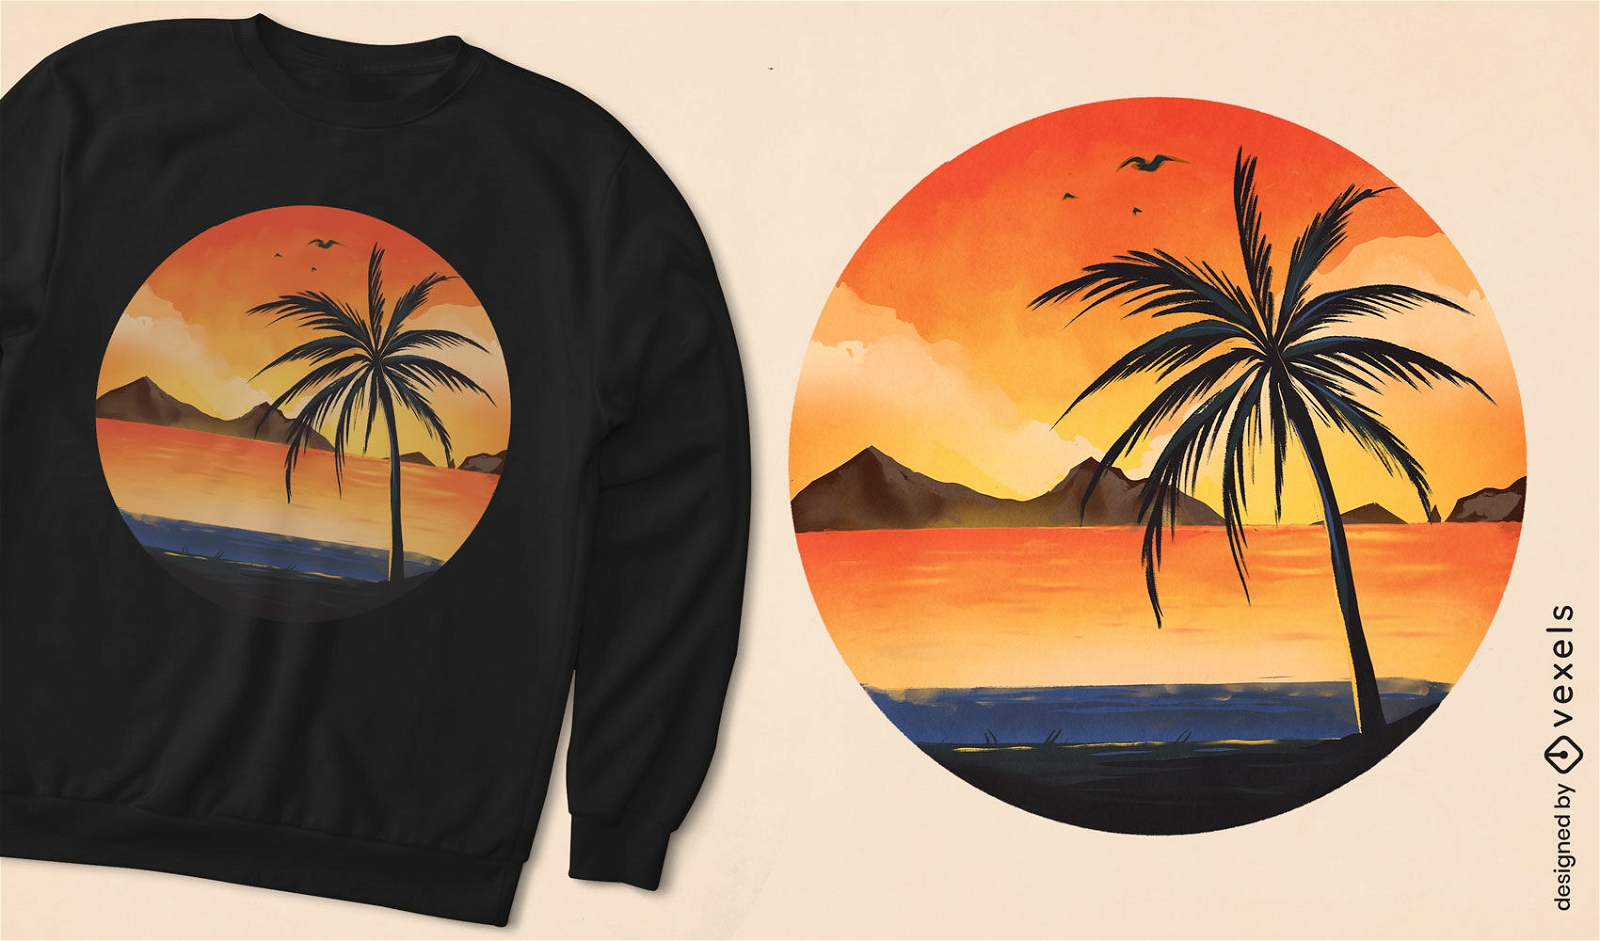 Dise?o de camiseta de paisaje de playa al atardecer.